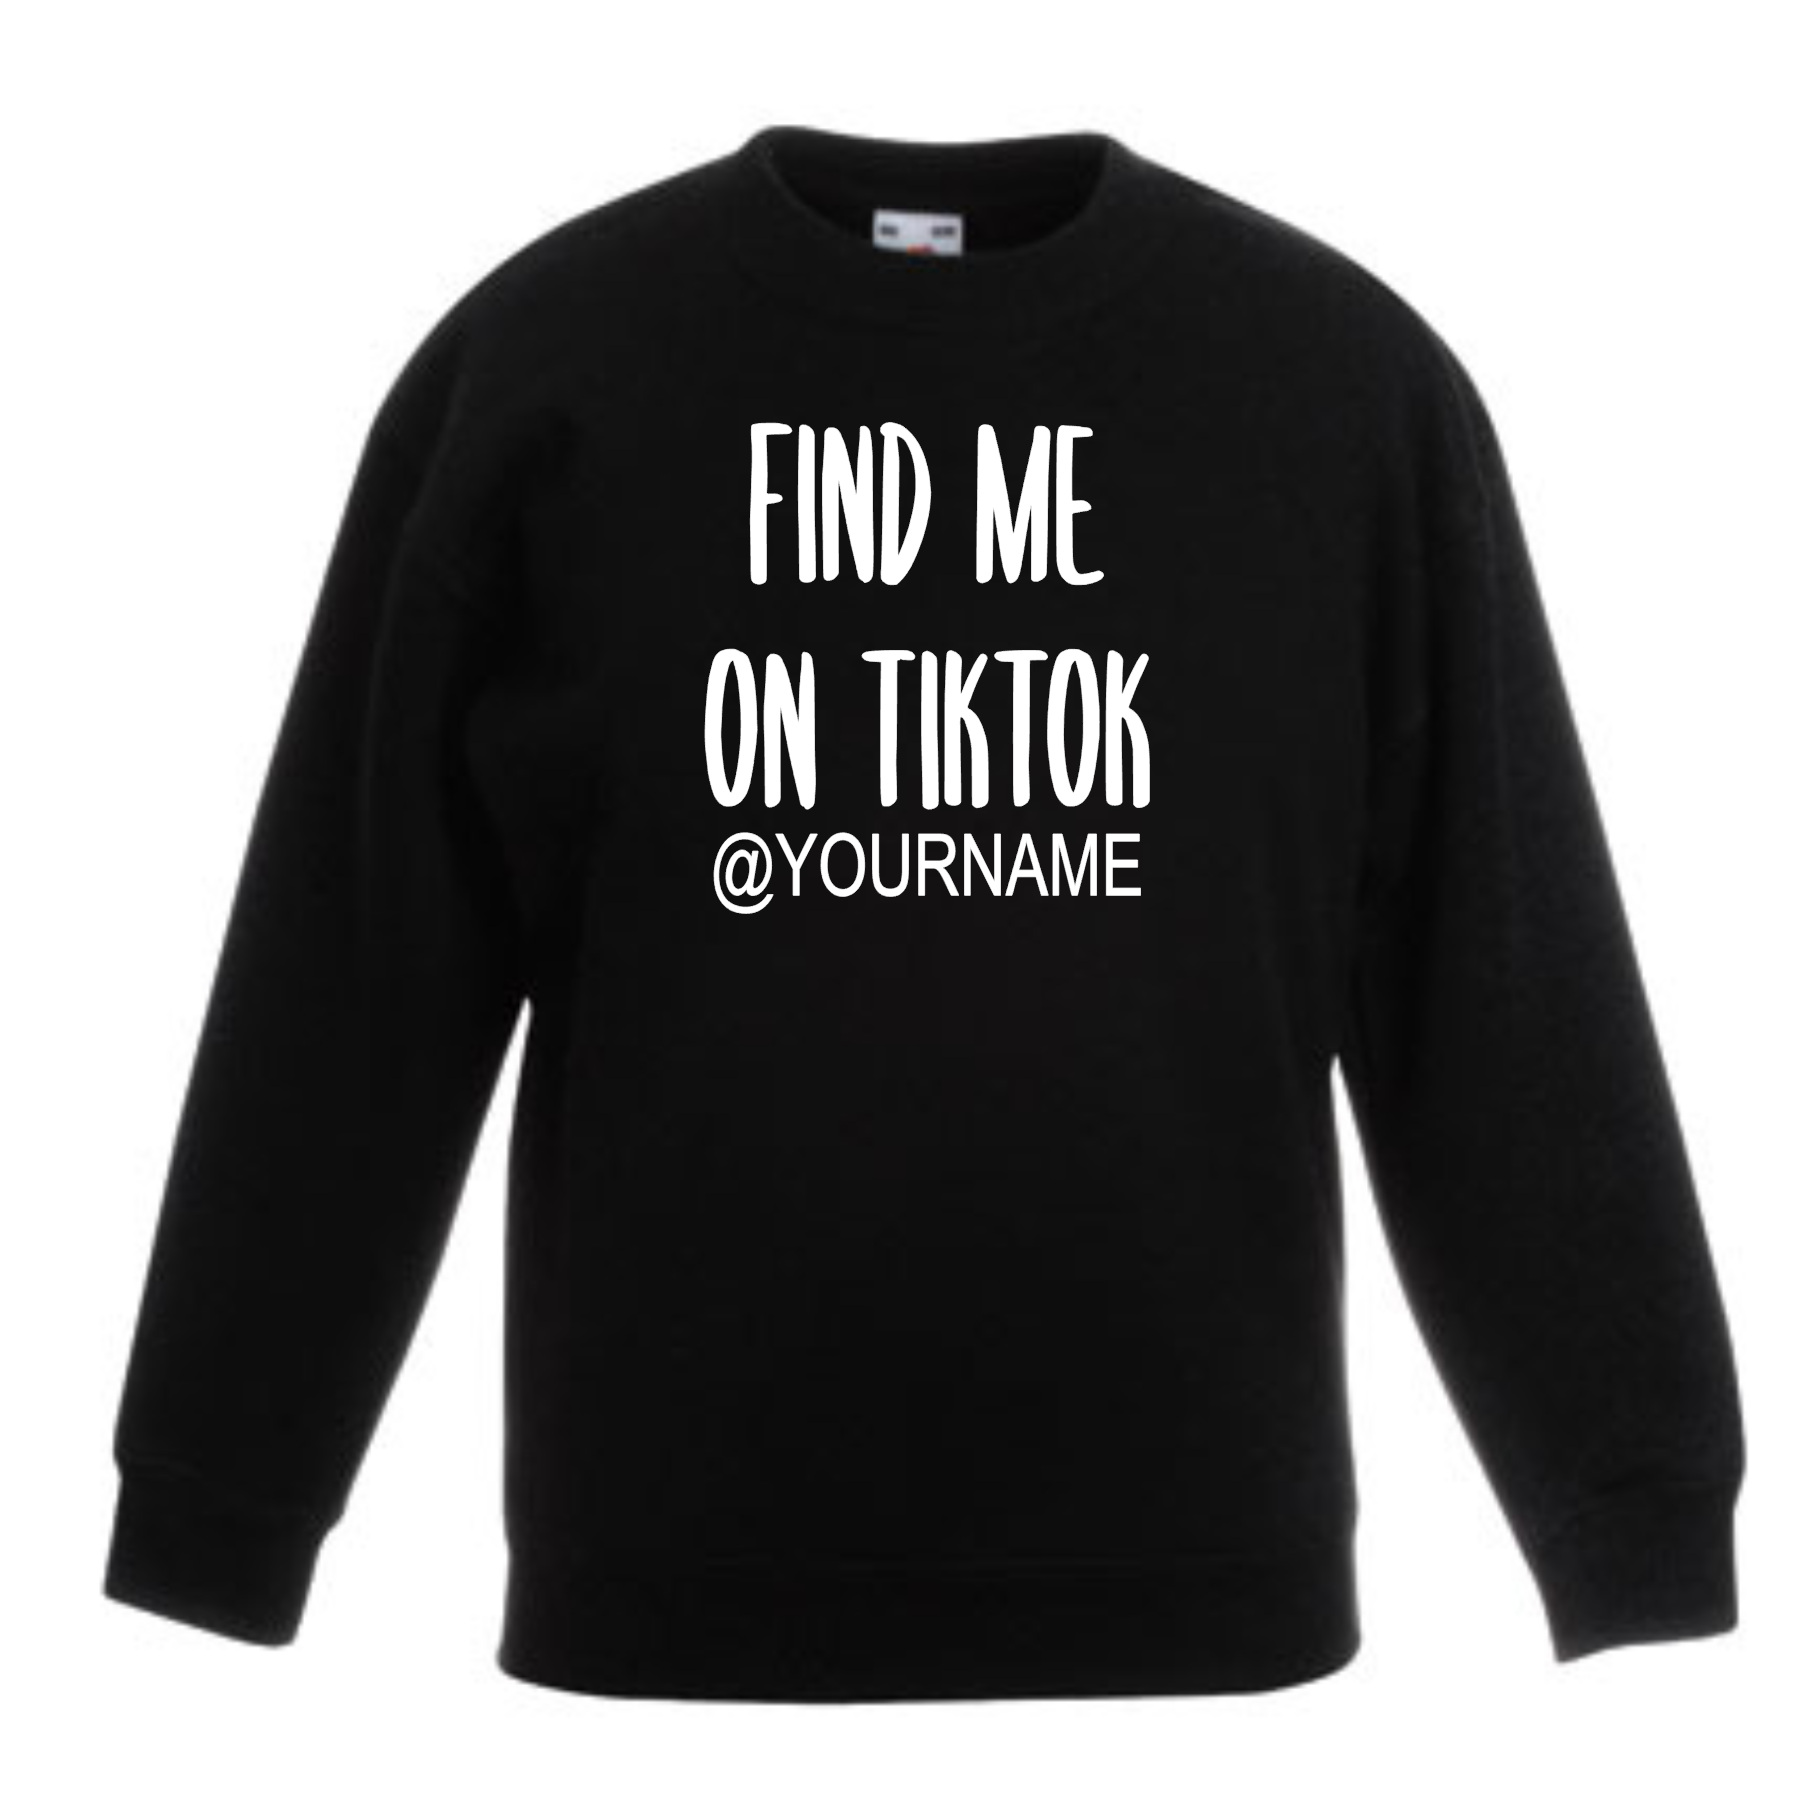 Kids sweater | Find me on tiktok @yourname